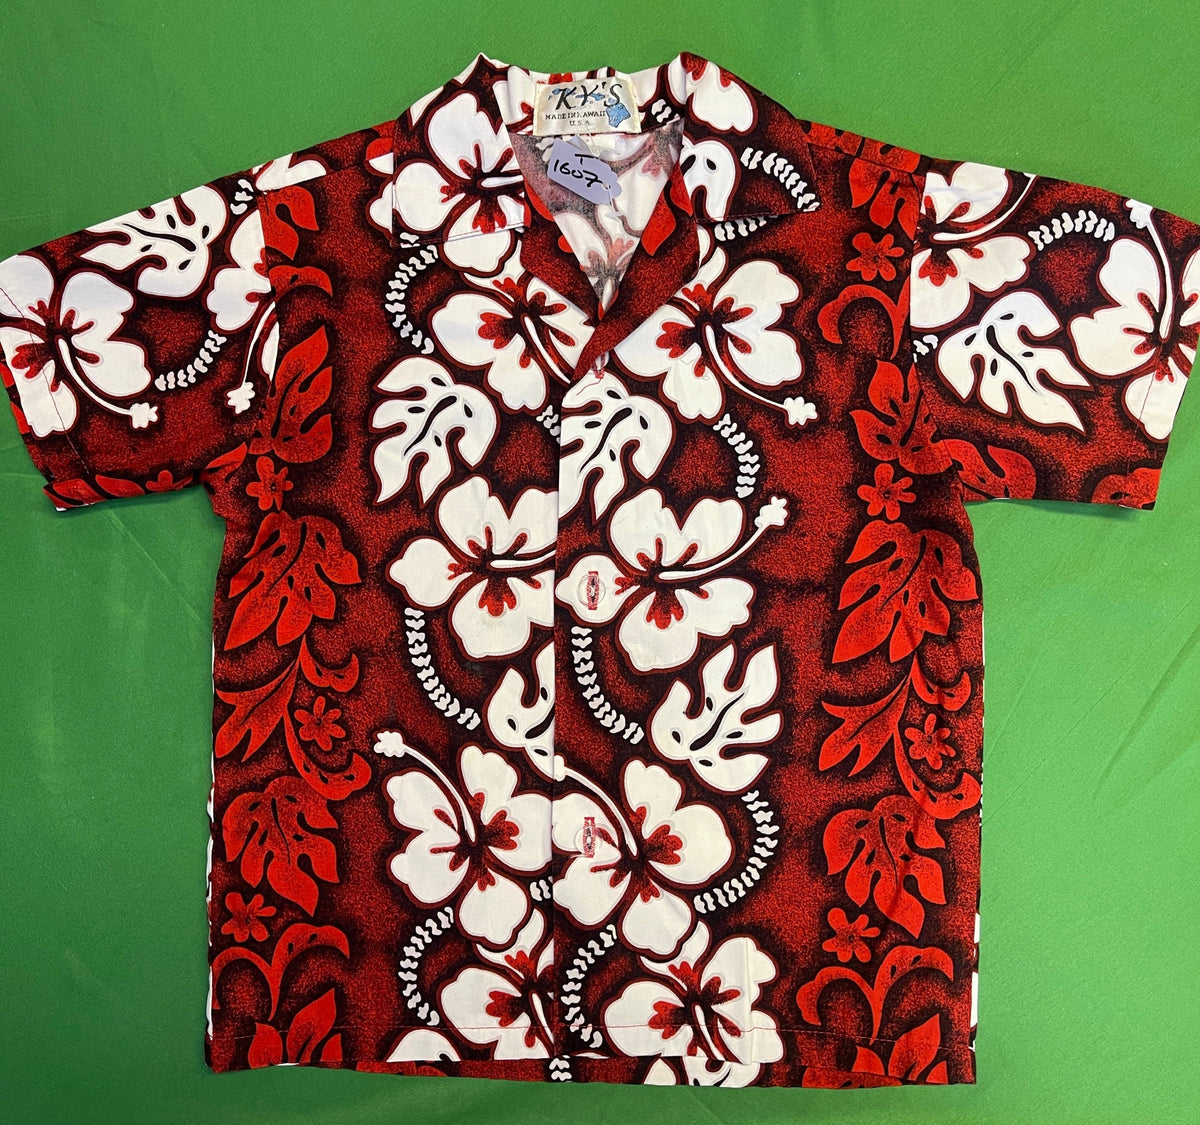 Made in Hawaii Red Hawaiian Aloha Shirt Youth Small 5-6